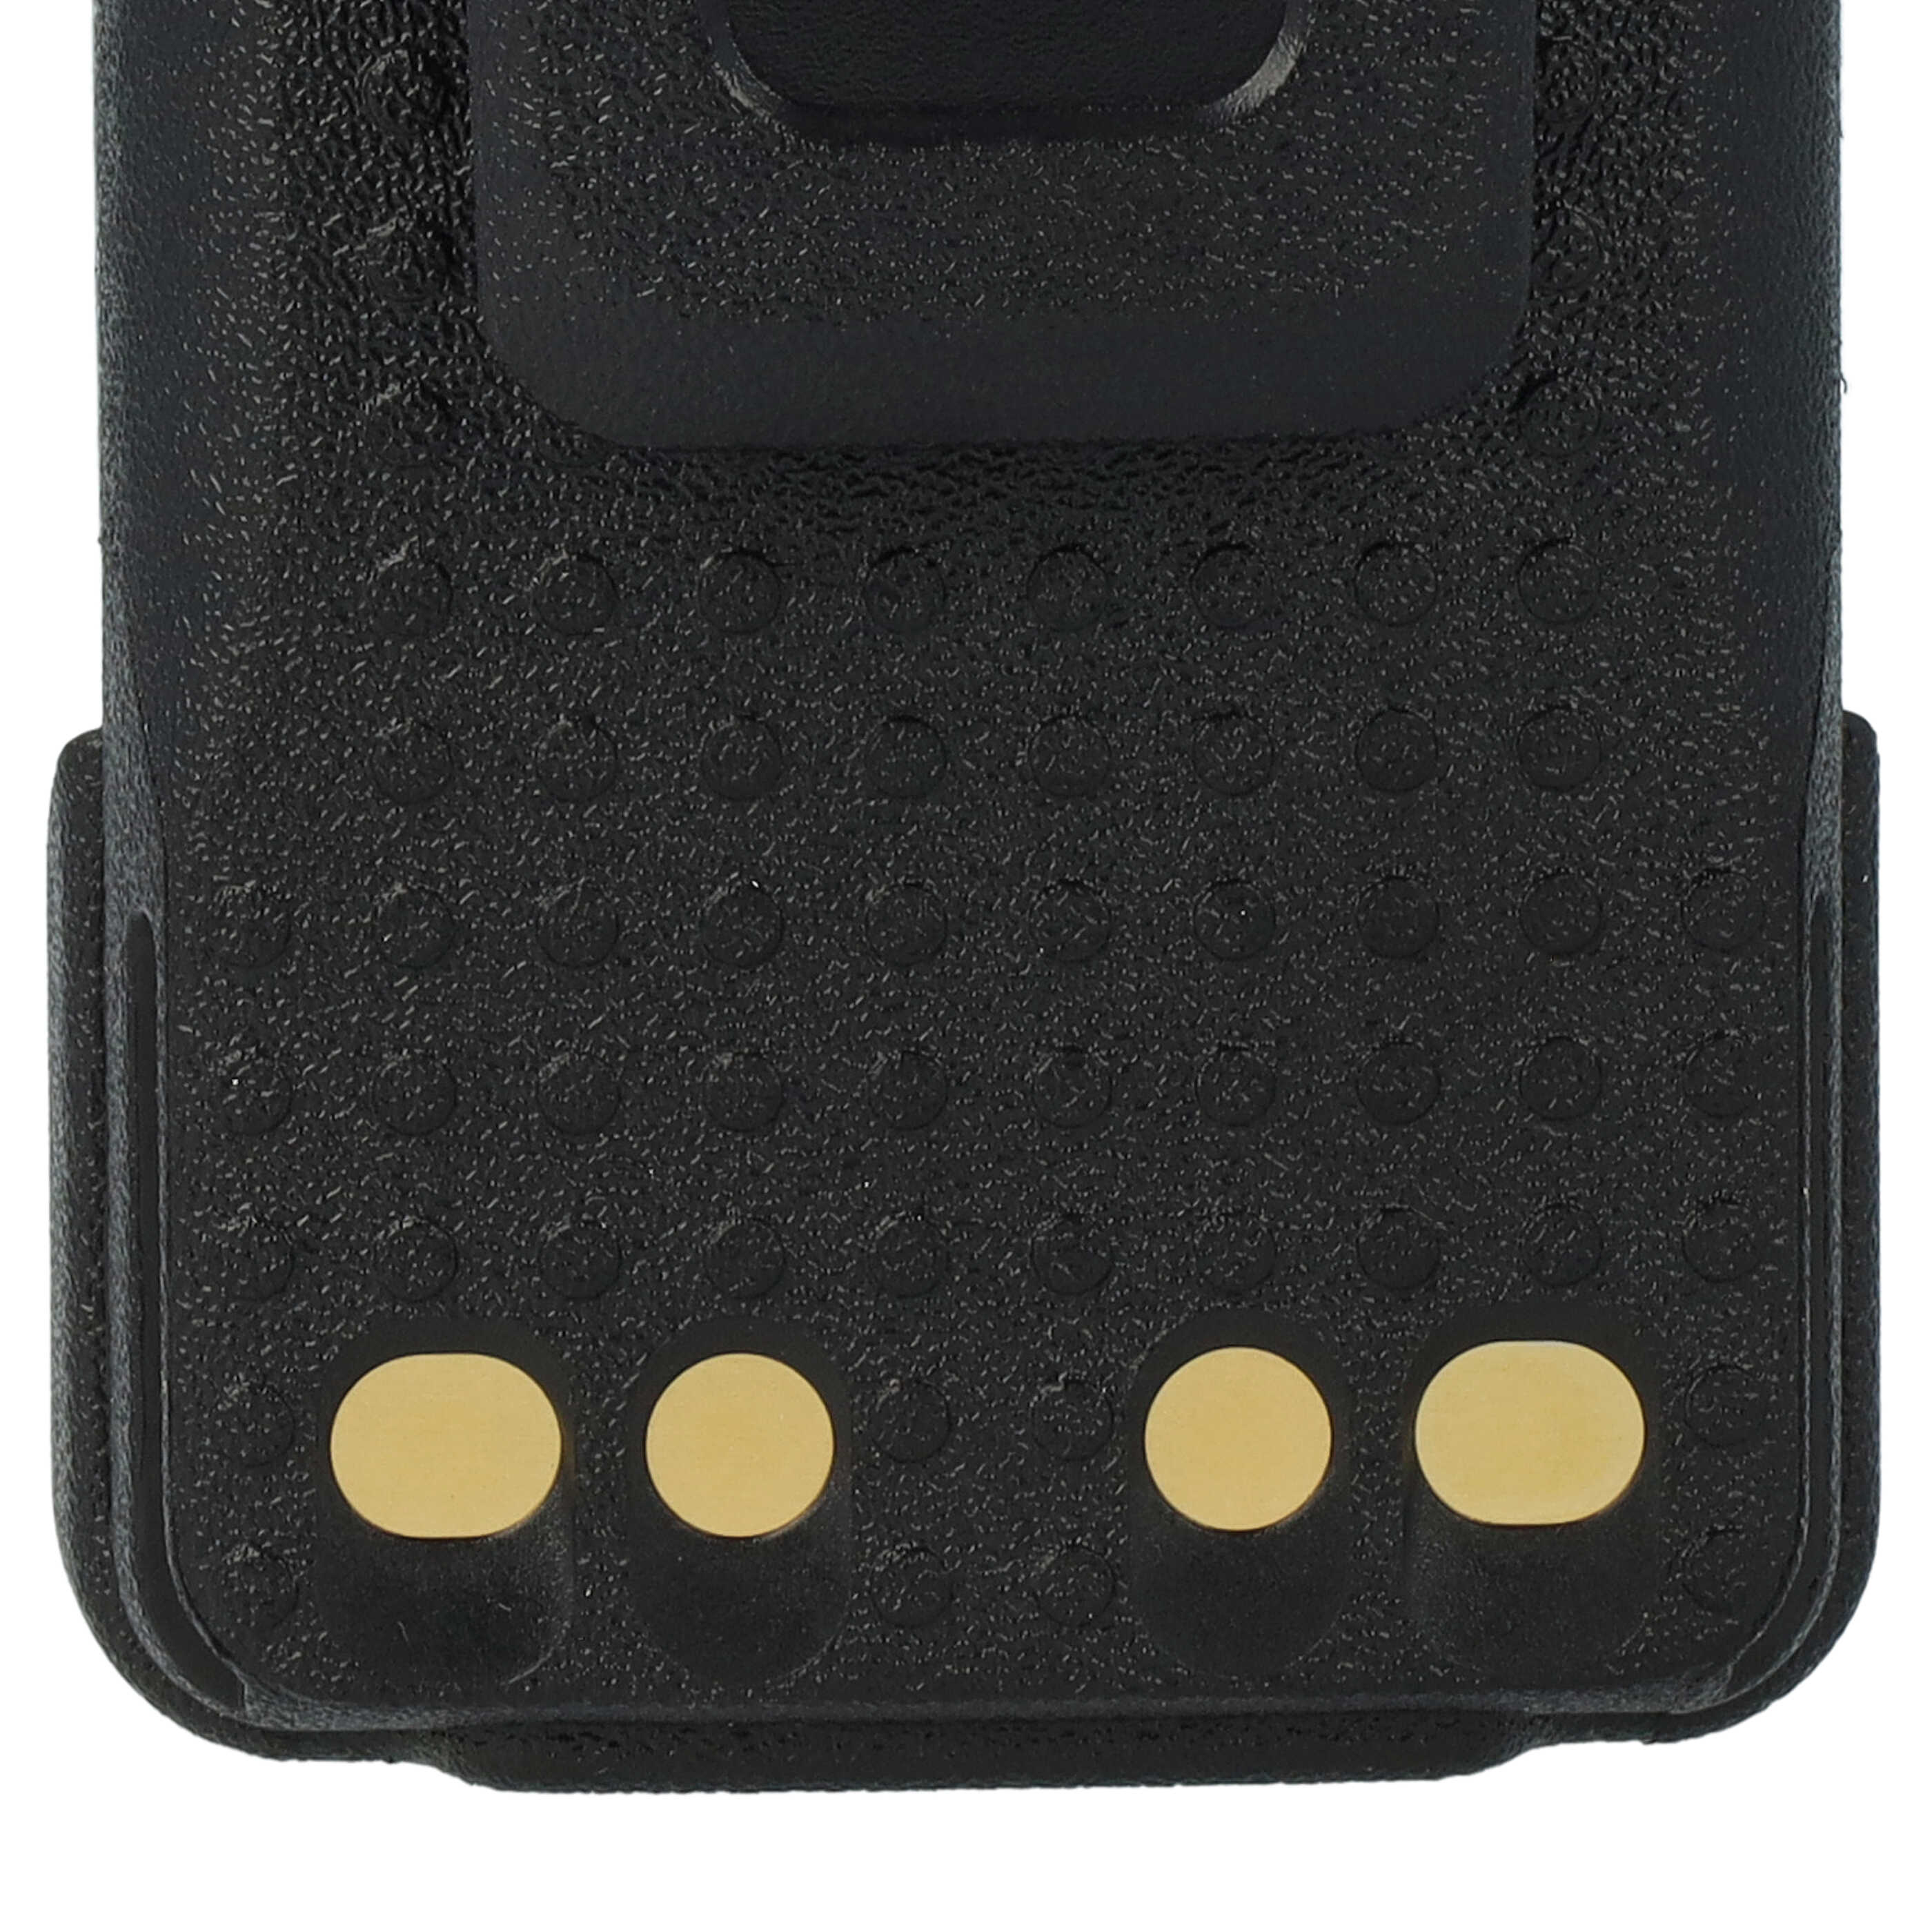 Batería reemplaza Motorola PMNN4406 para radio, walkie-talkie Motorola - 2600 mAh 7,4 V Li-Ion con clip